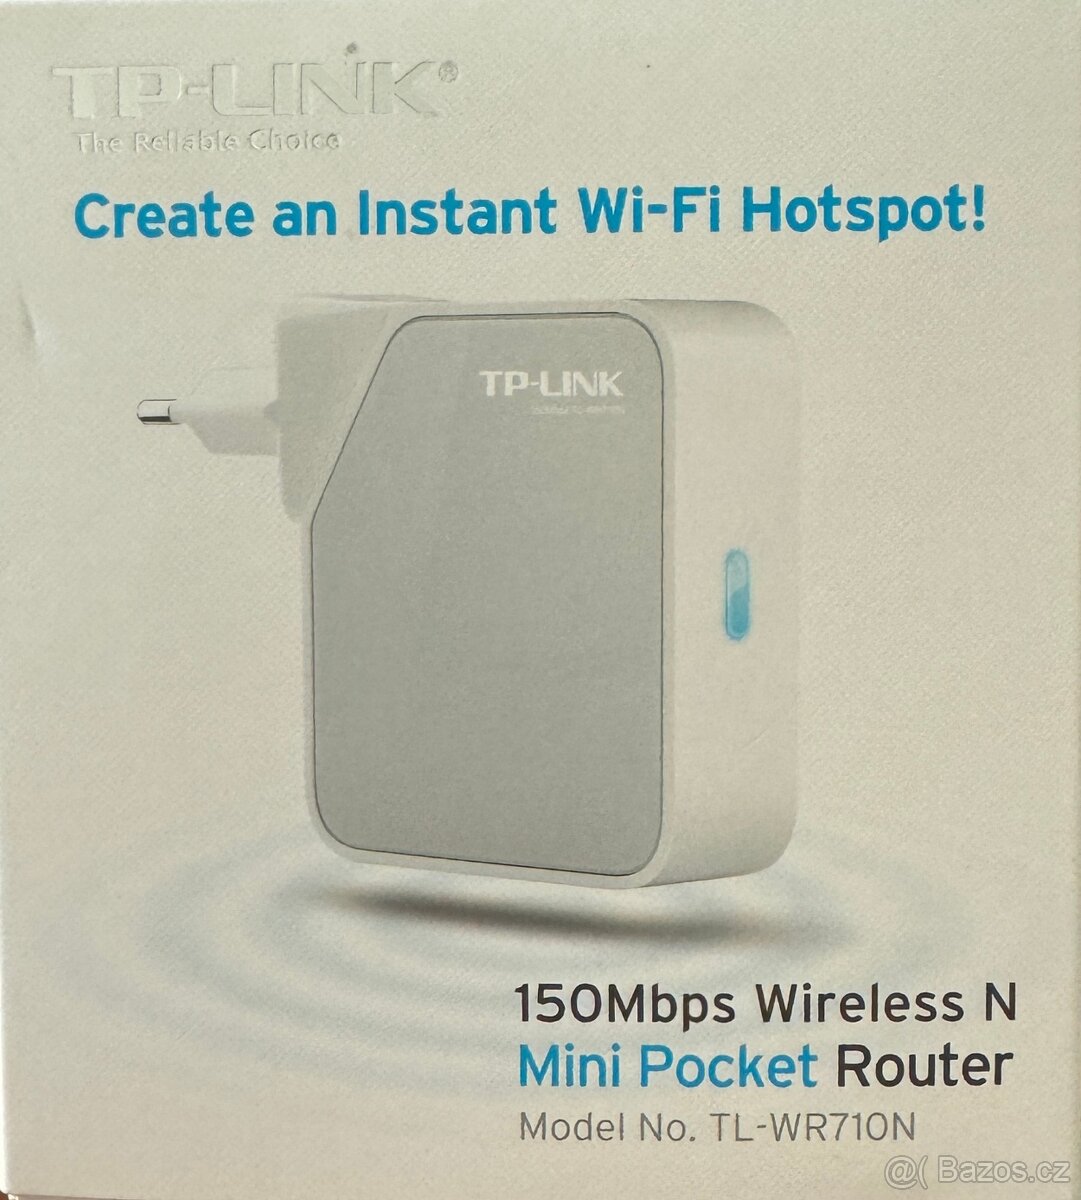 Wi-Fi Hotspot